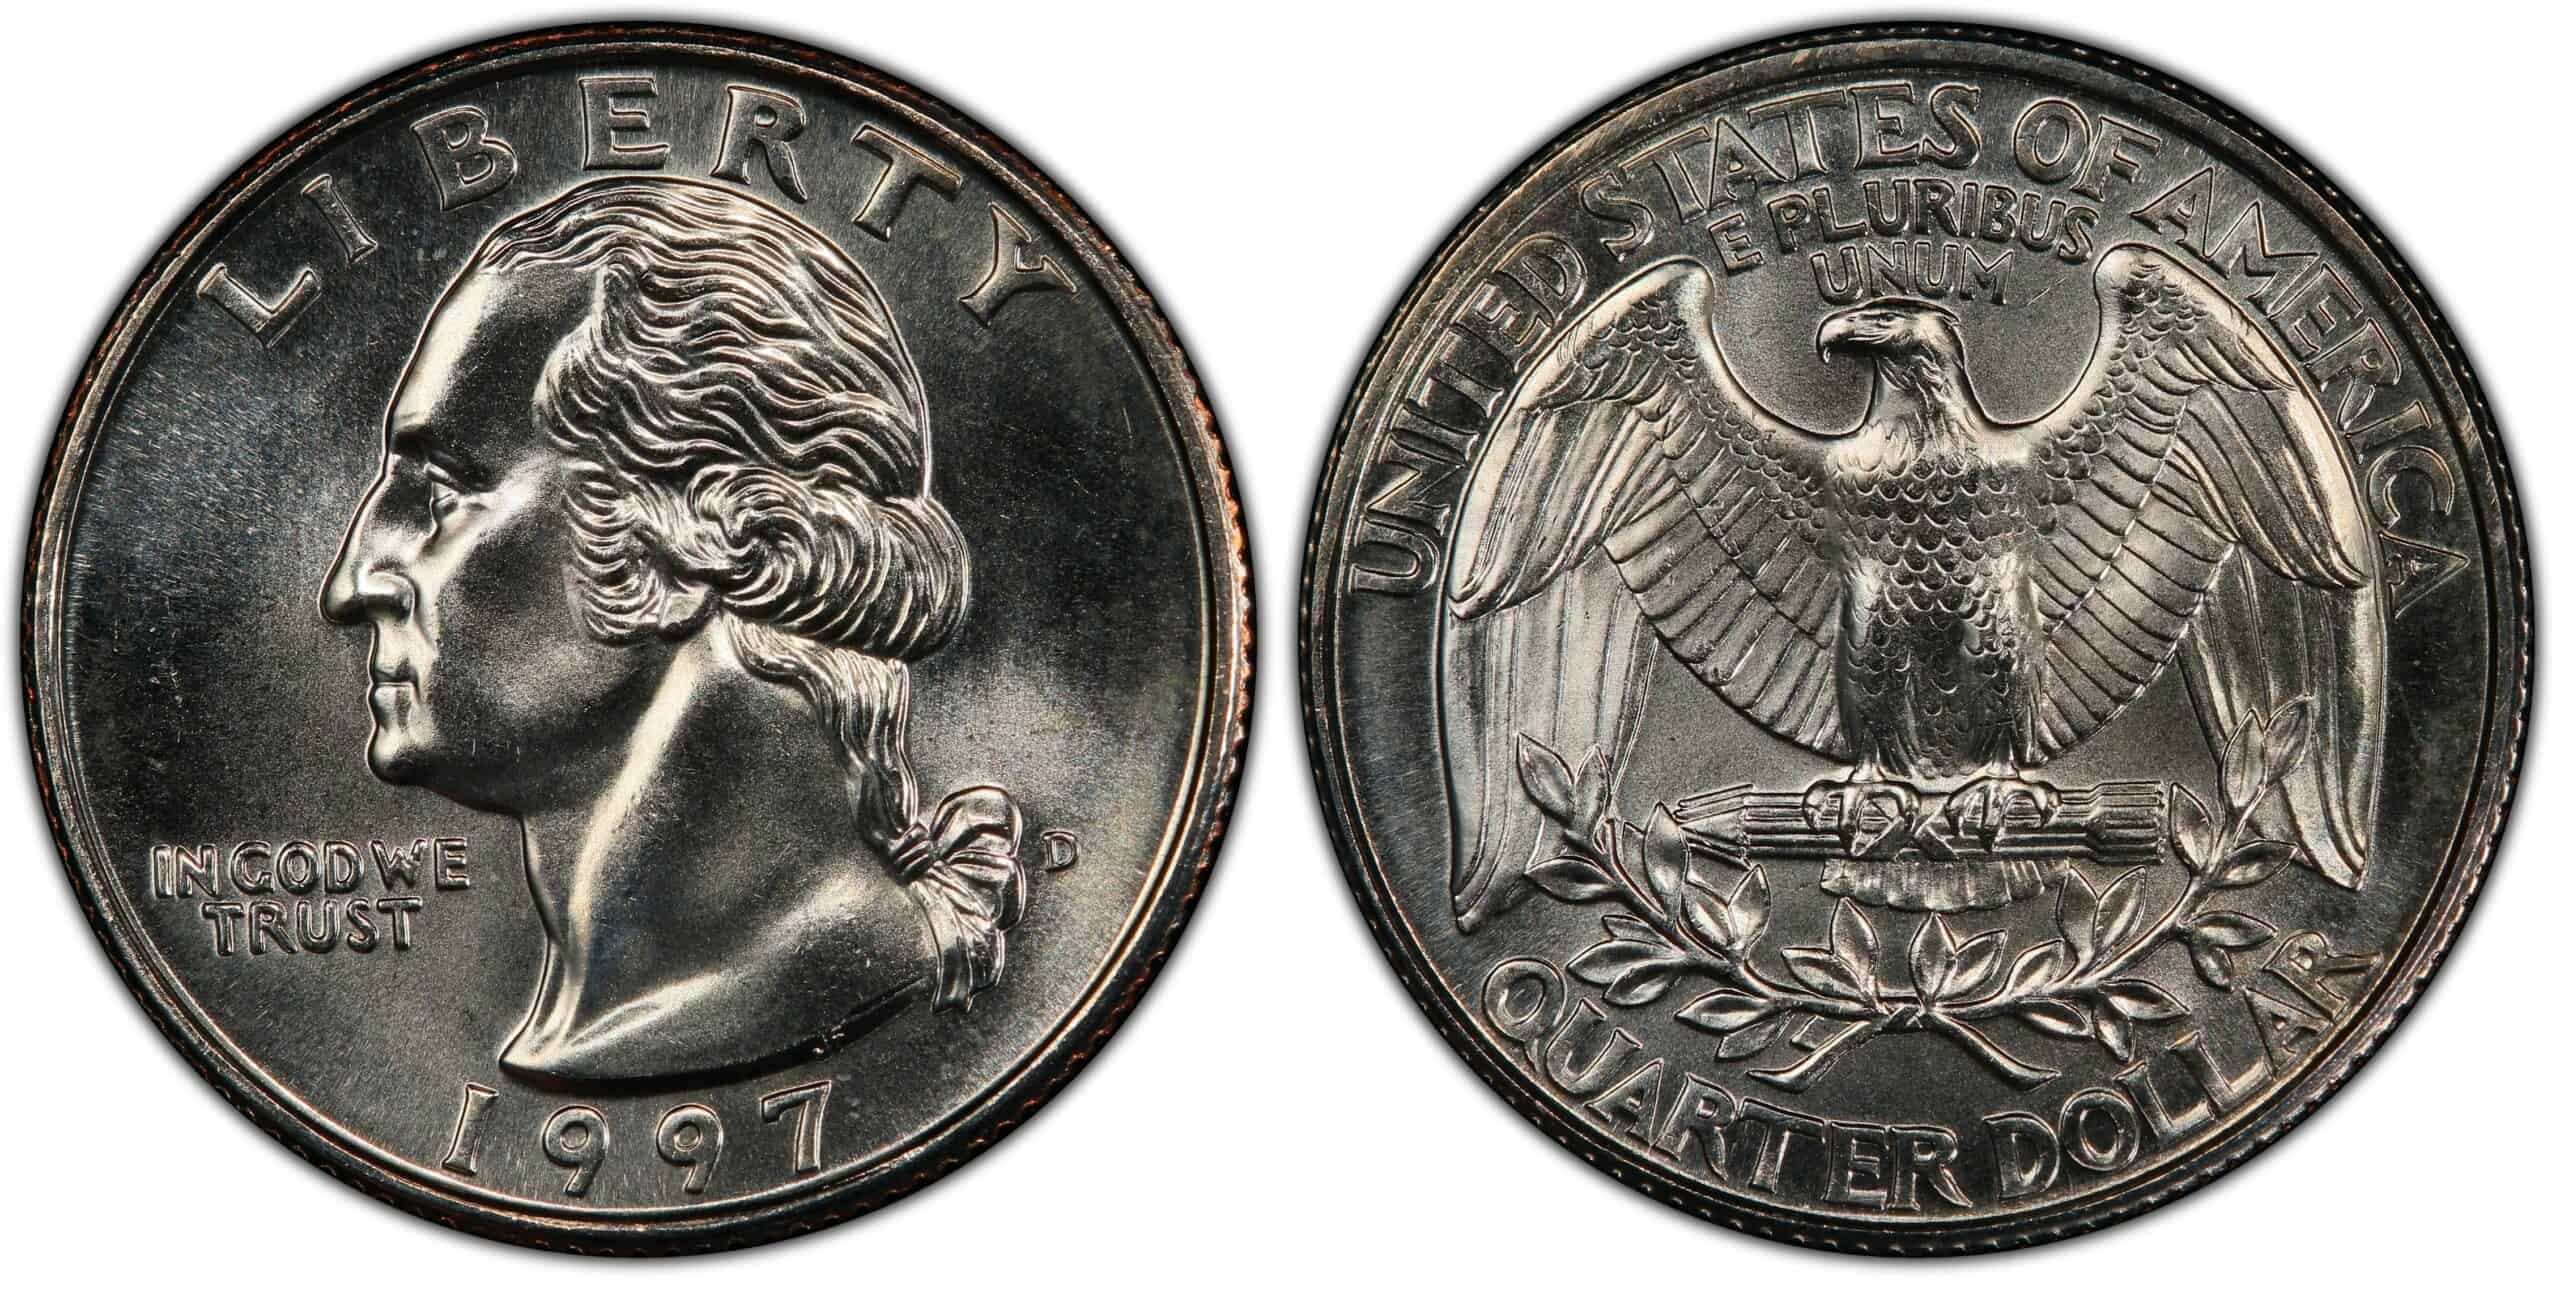  1997 D Mark Quarter Value